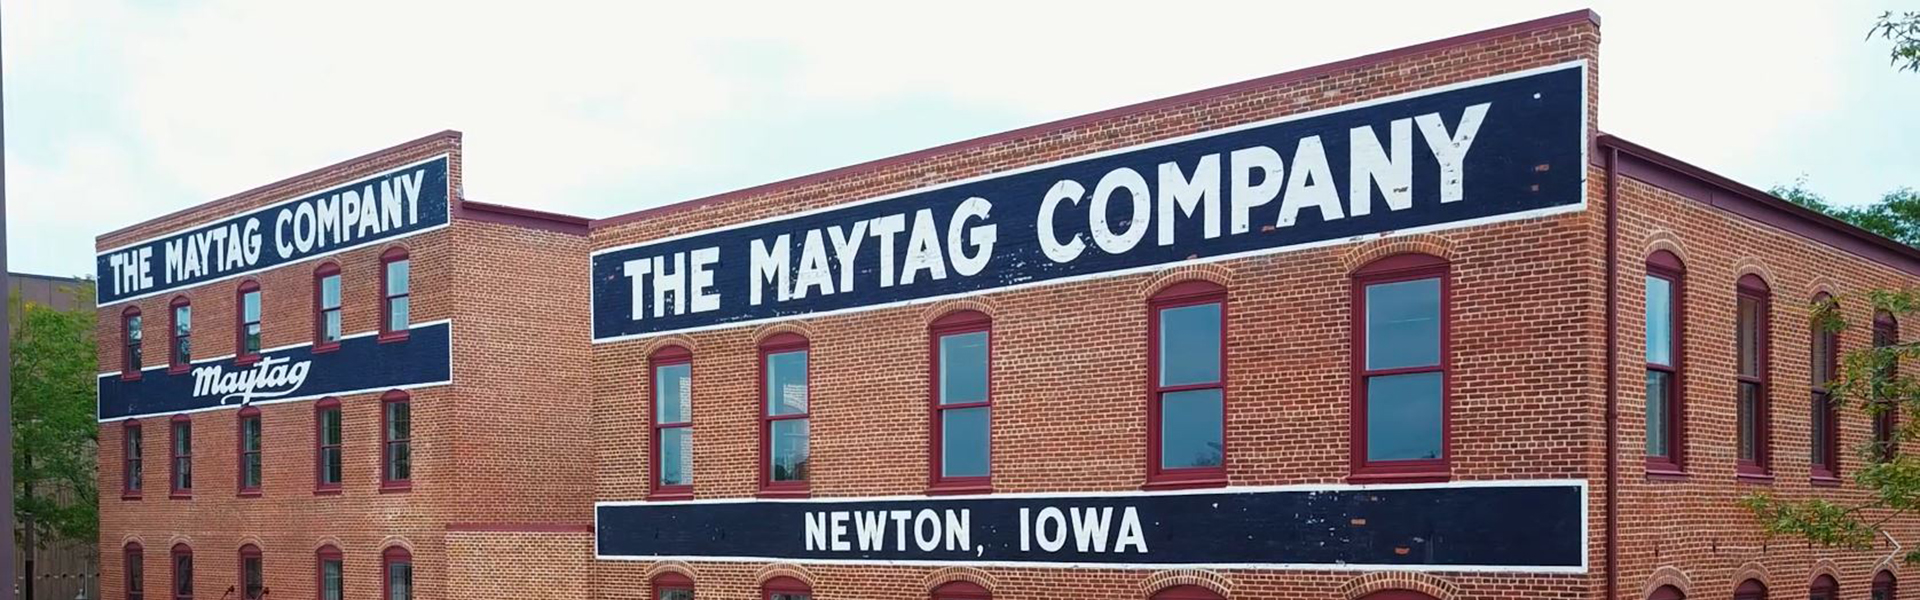 Historic Maytag Company buildings